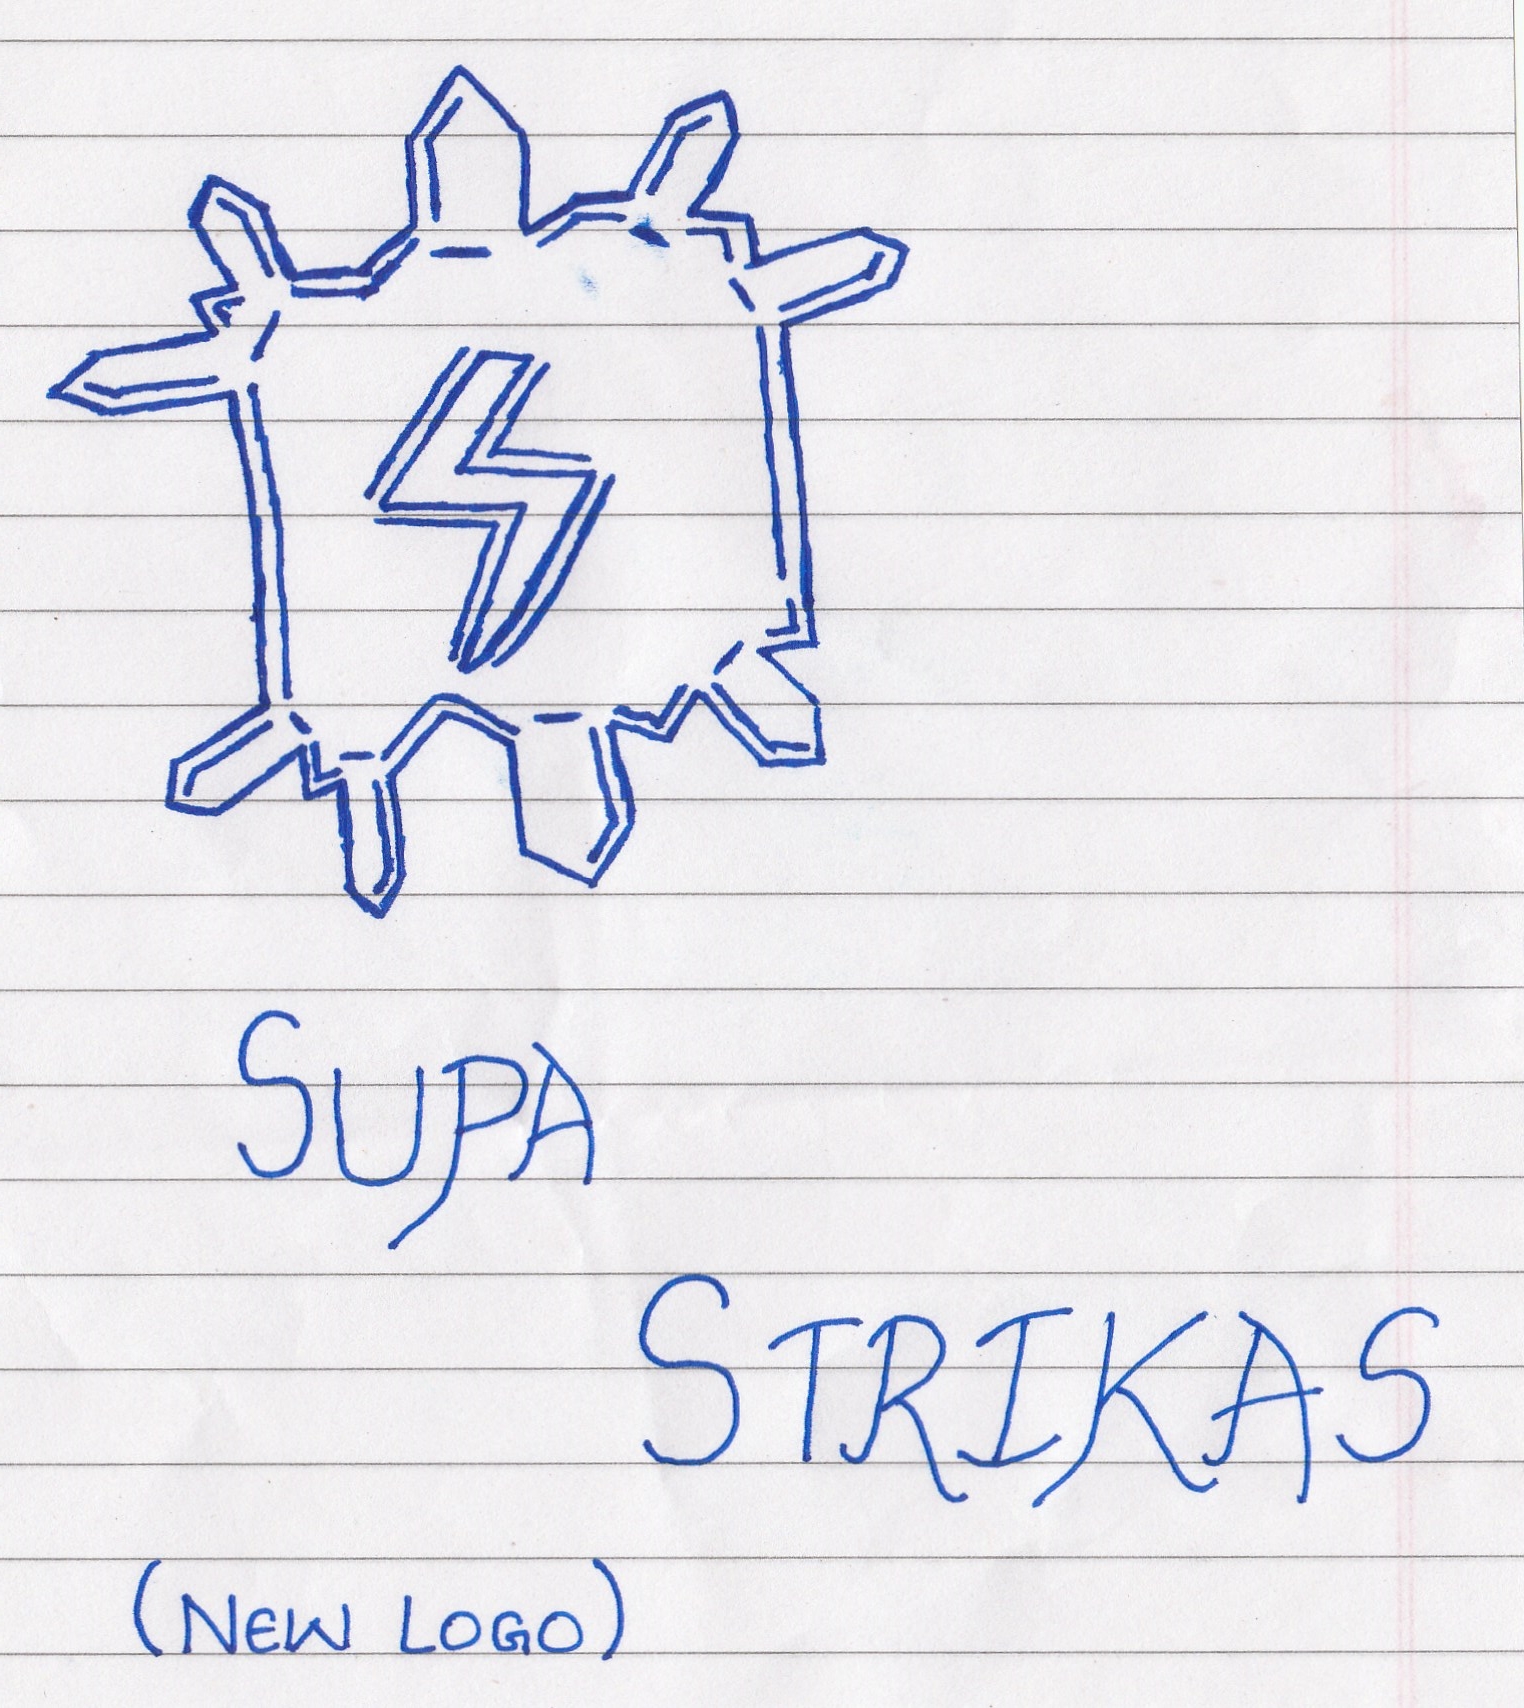 Supa Strikas Image HD Wallpaper And